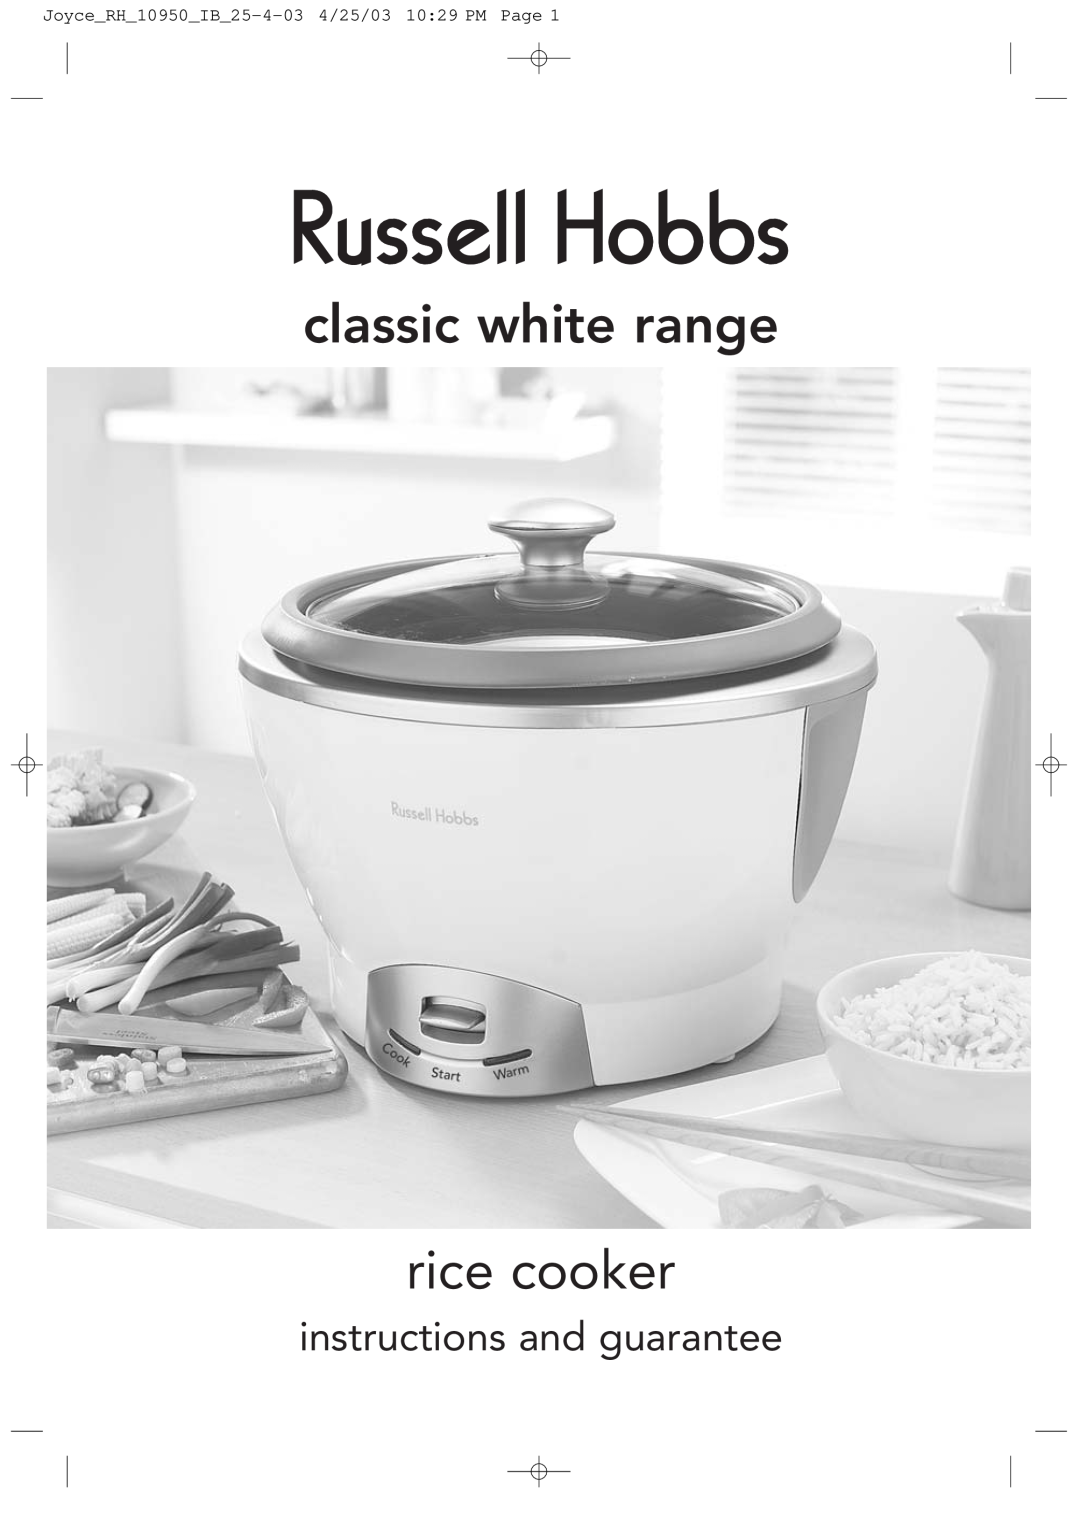 Russell Hobbs JOYCE_RH_10950_IB_25-4-03 manual classic white range rice cooker, instructions and guarantee 